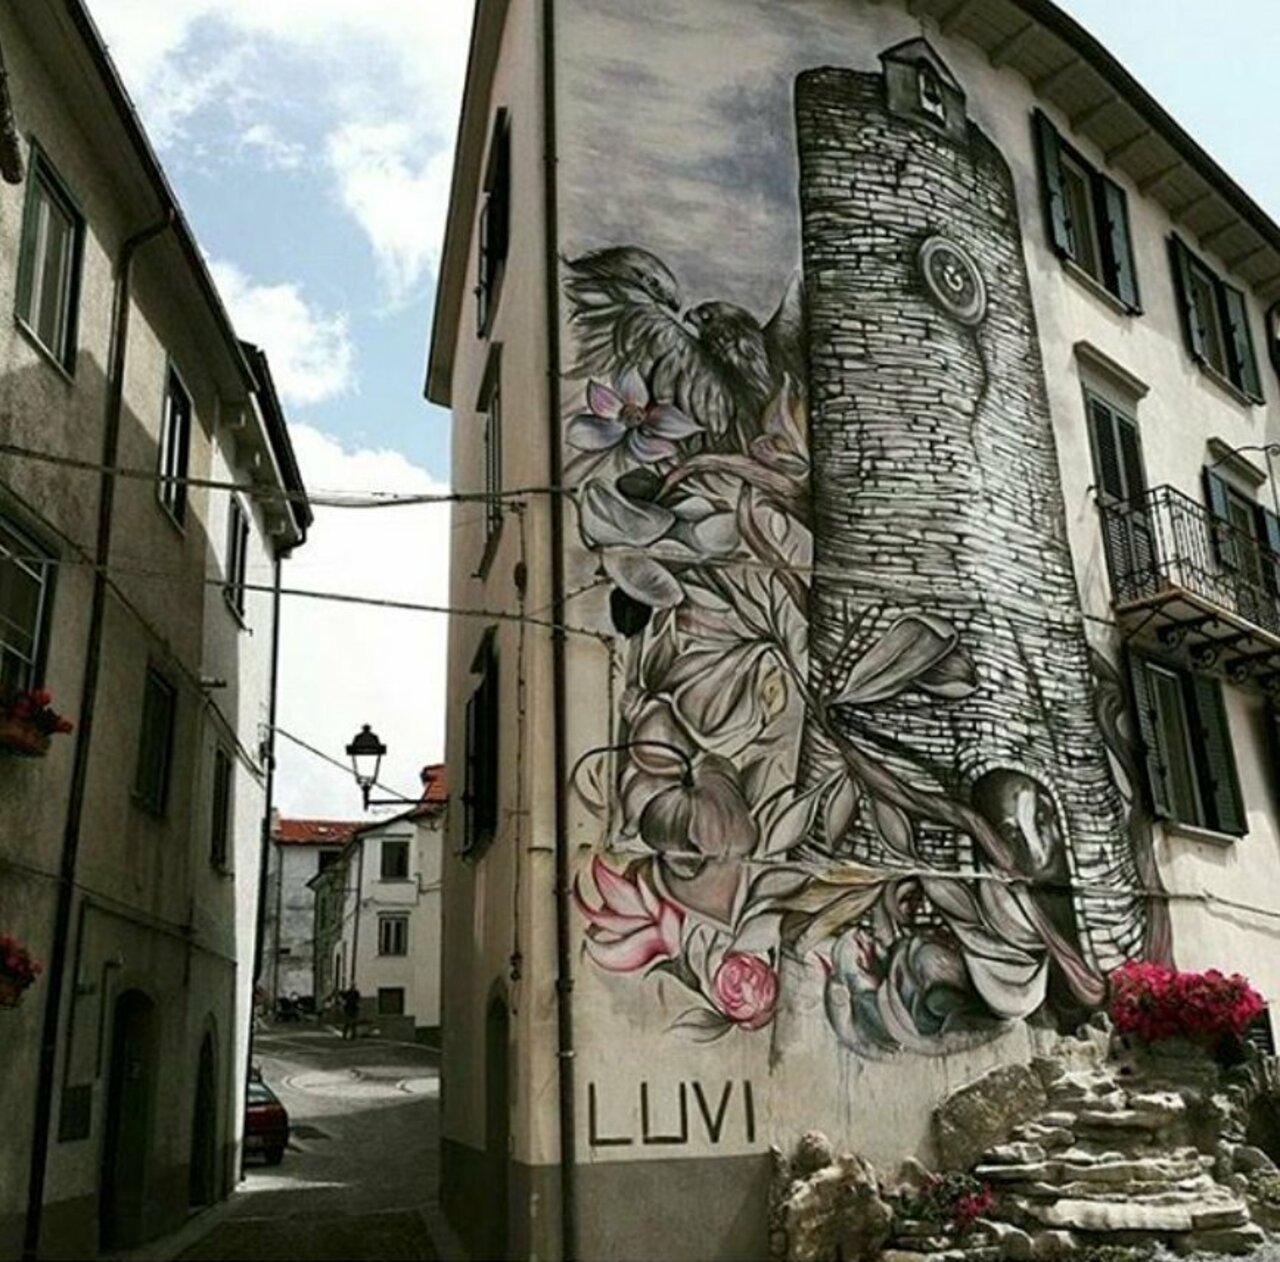 Nice wall by Italian artist Luvi in Molise, Italy (2017) #streetart #artderue #straßenkunst #artedelcalle #стритарт #граффити #urbanart #arteurbano #mural #graffiti #wallart #luvi #molise #italy #italia  via Pinterest | https://goo.gl/hvfhvC https://t.co/ov5LTVYDFj